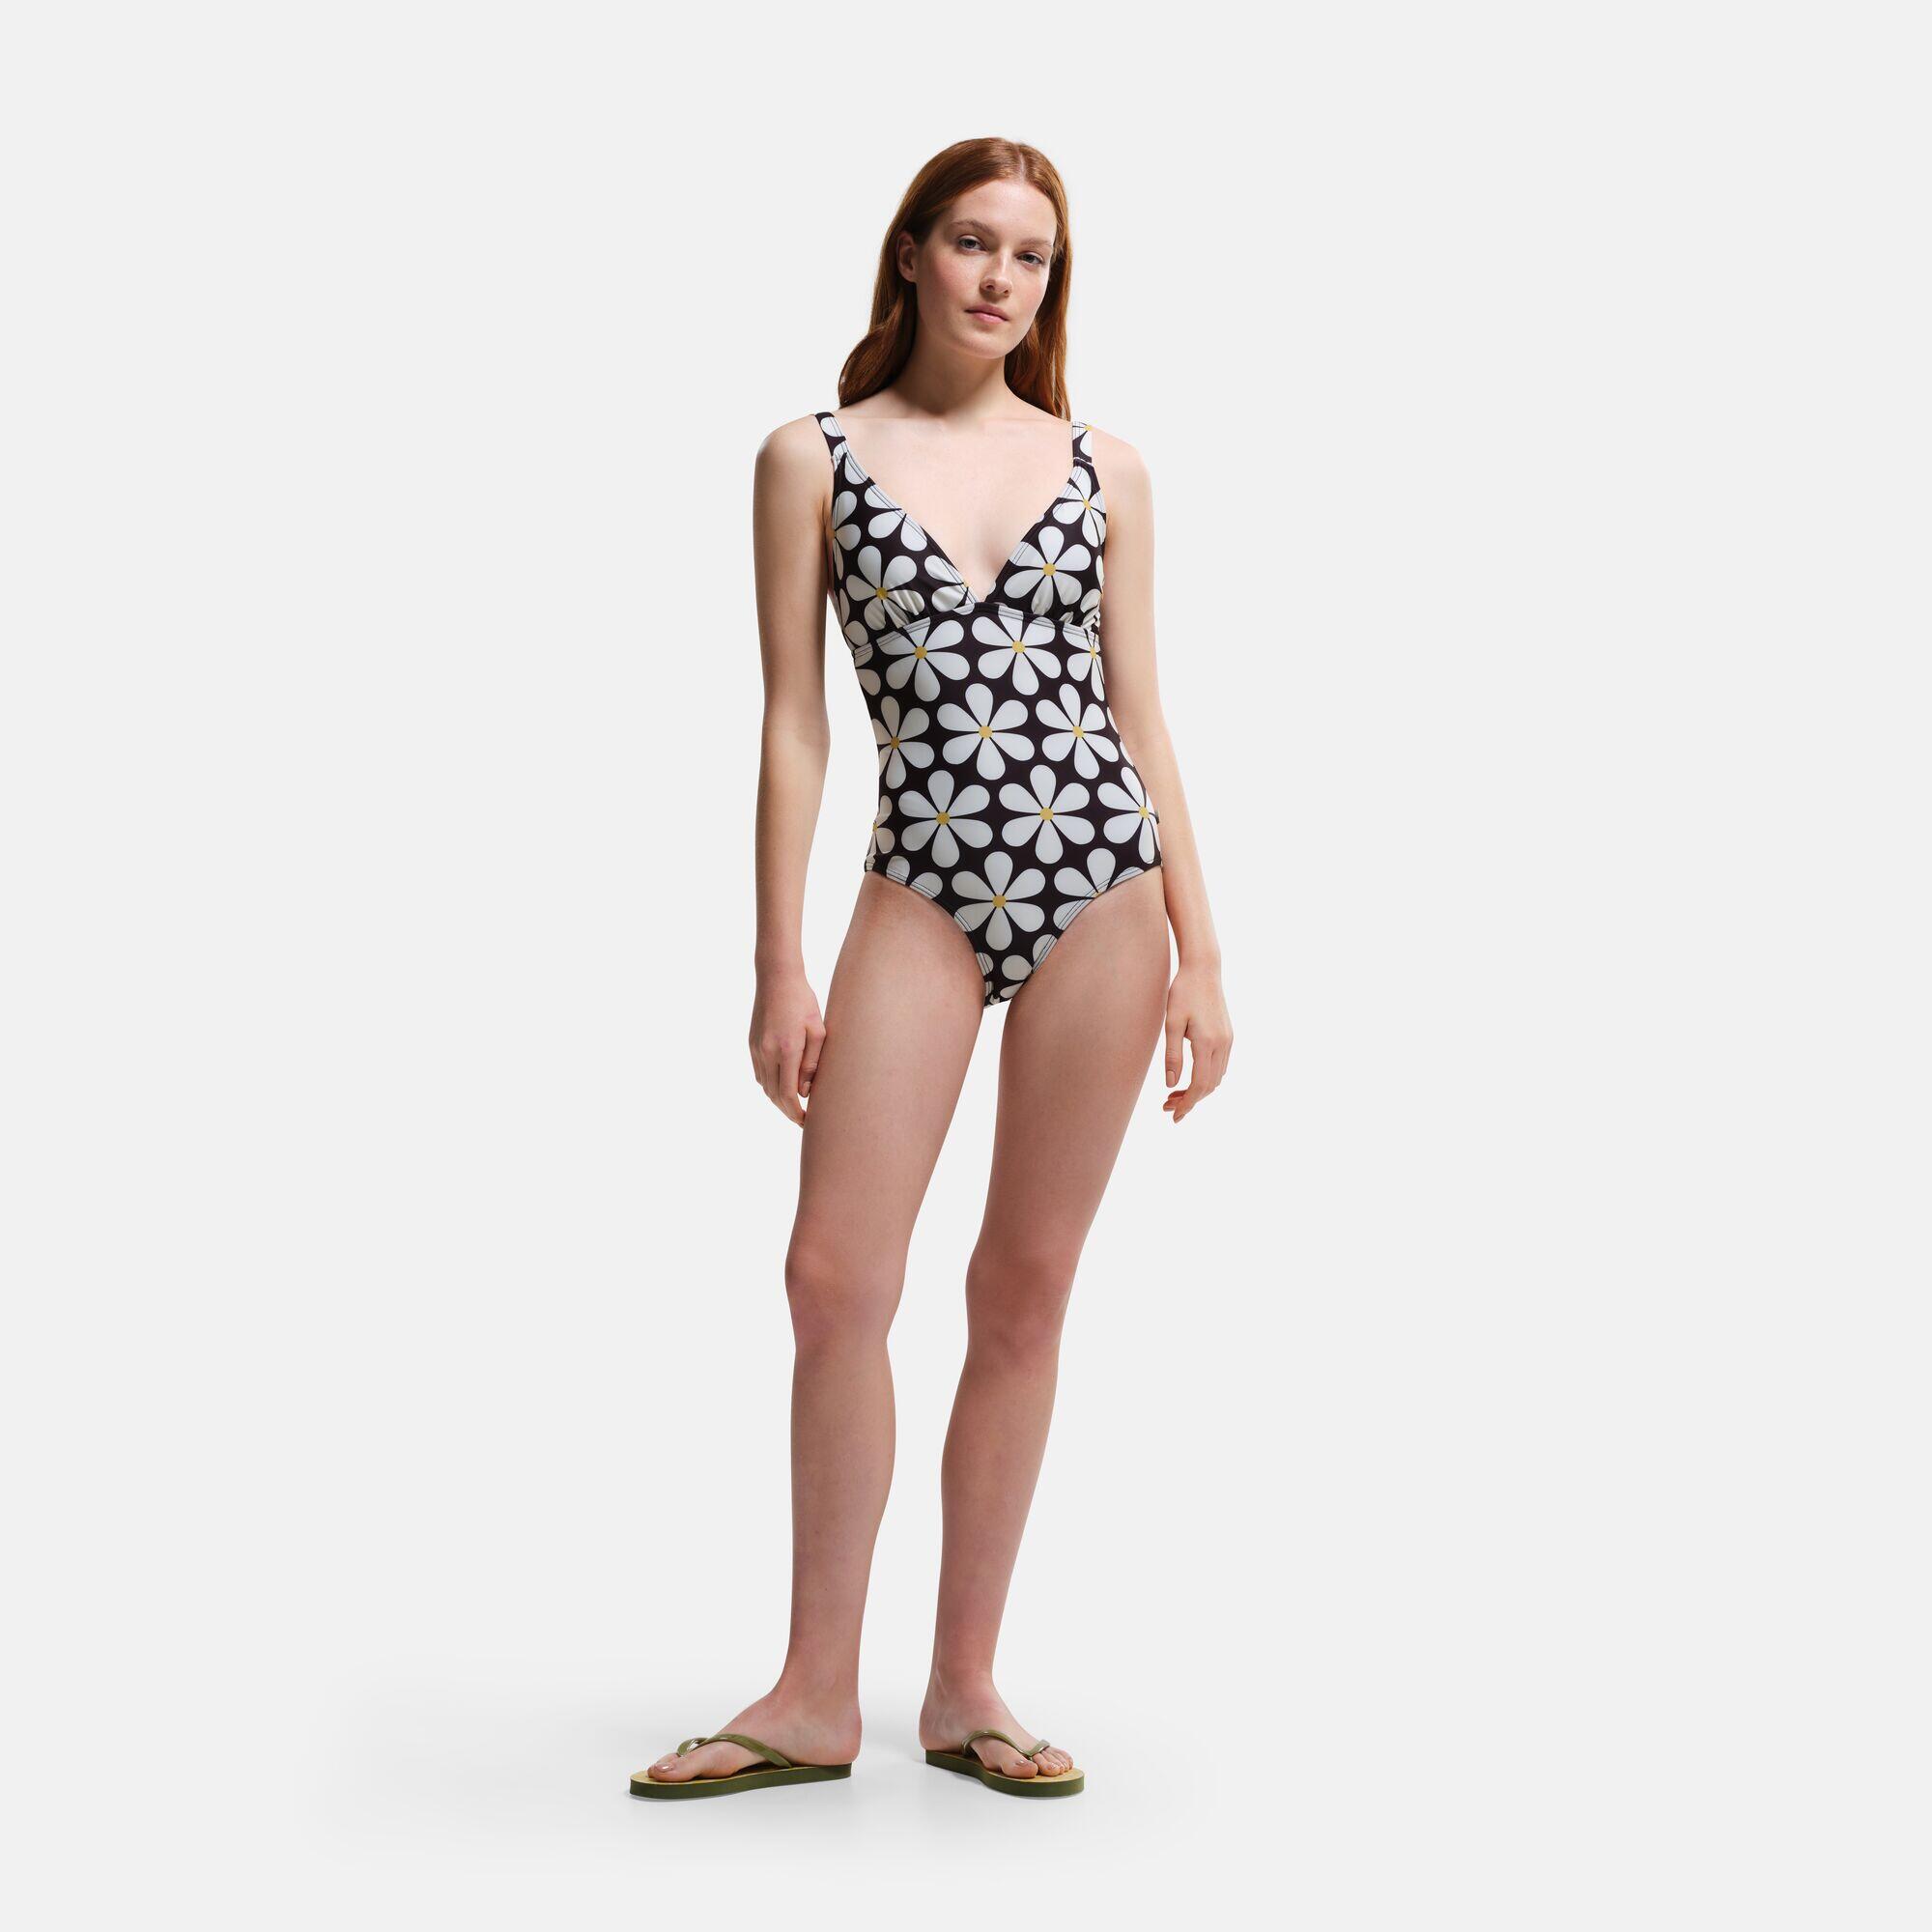 REGATTA Orla Kiely  Women's Beach  Swimsuit